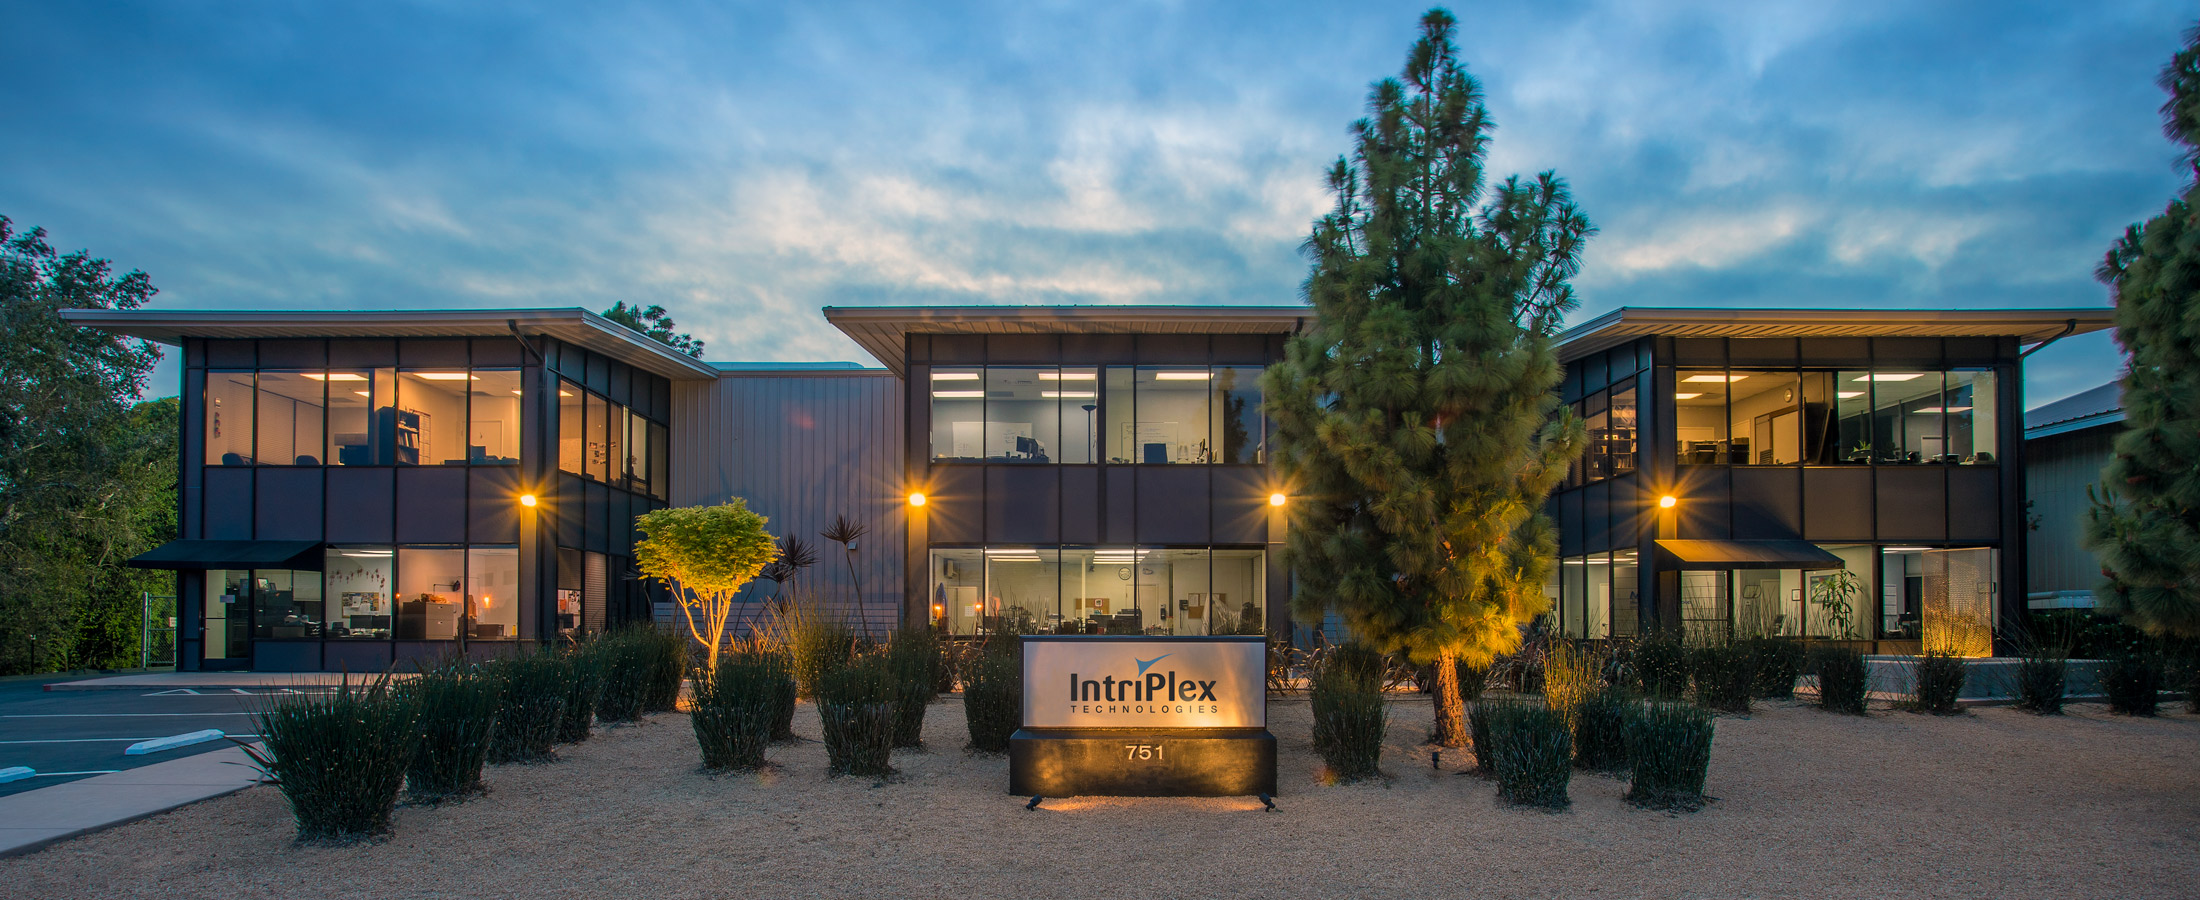 IntriPlex Technologies' headquarters building in Santa Barbara, California.